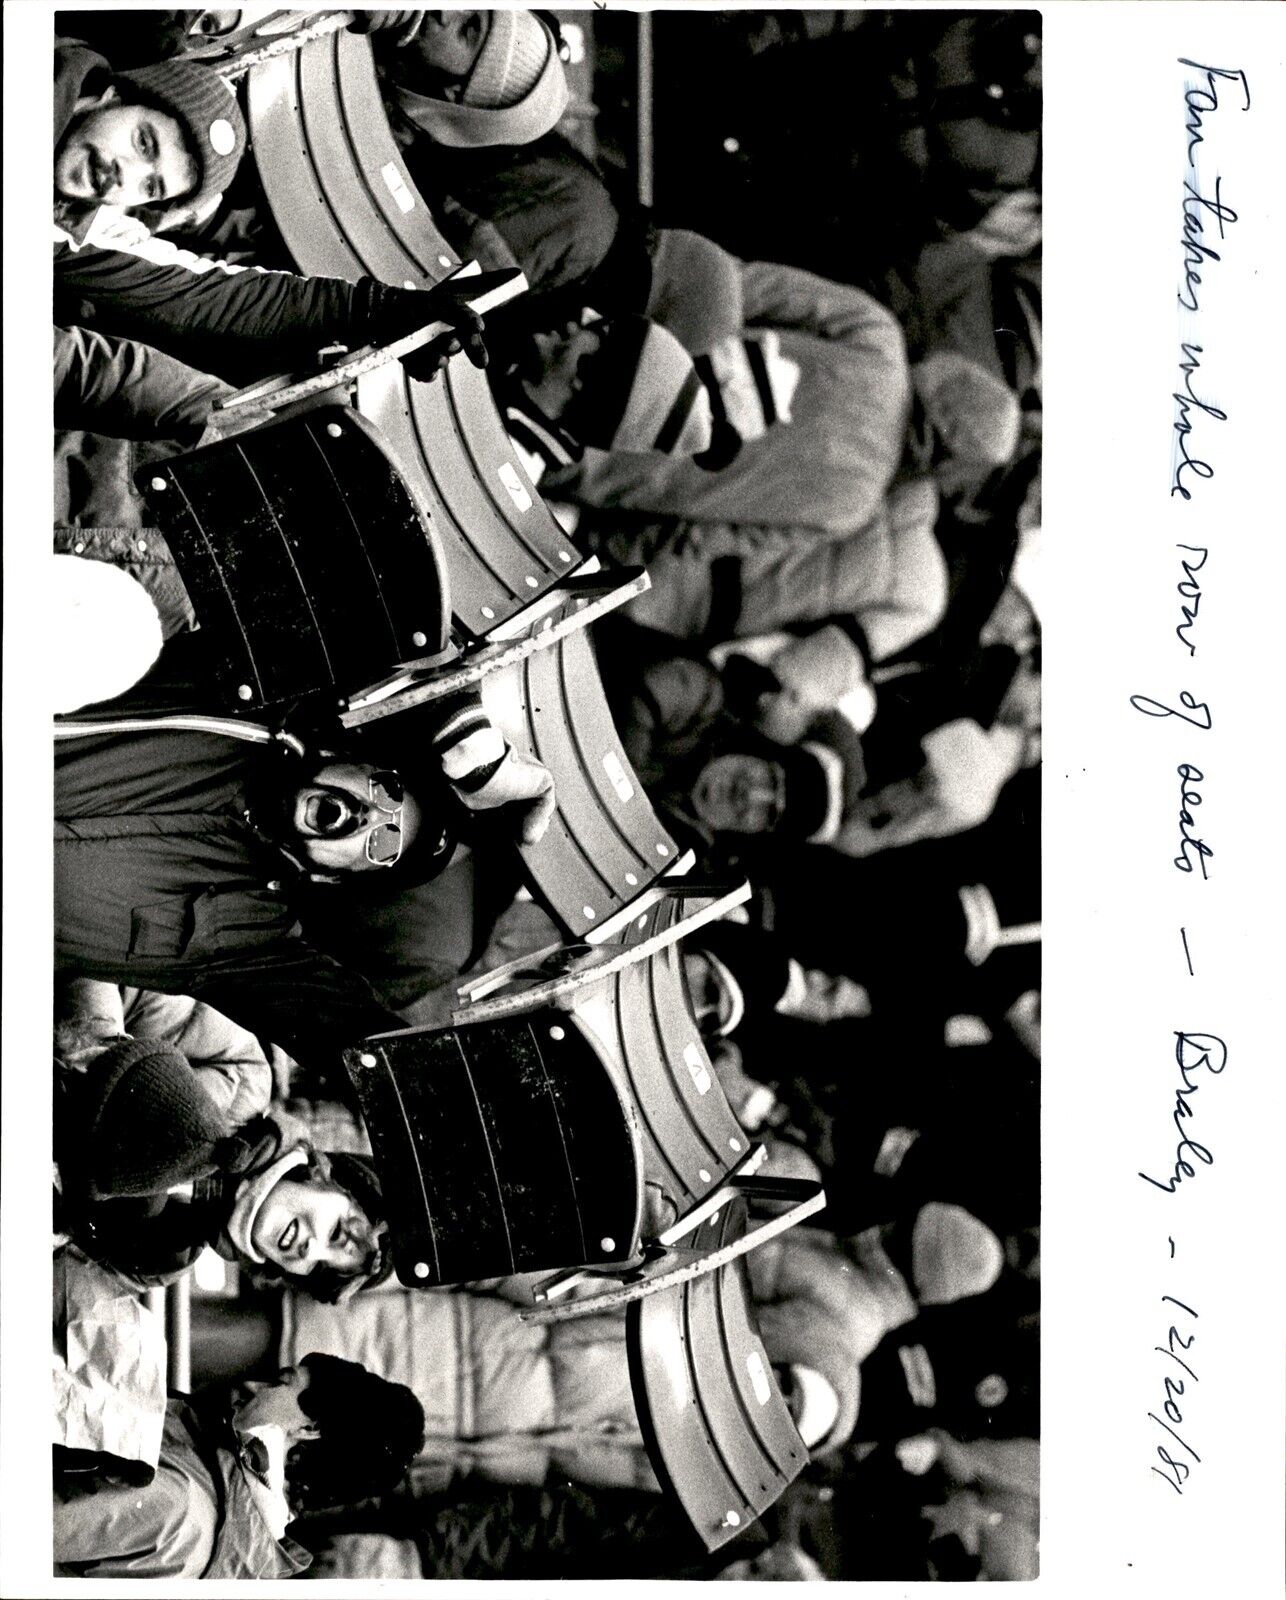 LG980 1981 Orig Braley Photo FAN TAKES ENTIRE ROW OF SEATS METROPOLITAN STADIUM